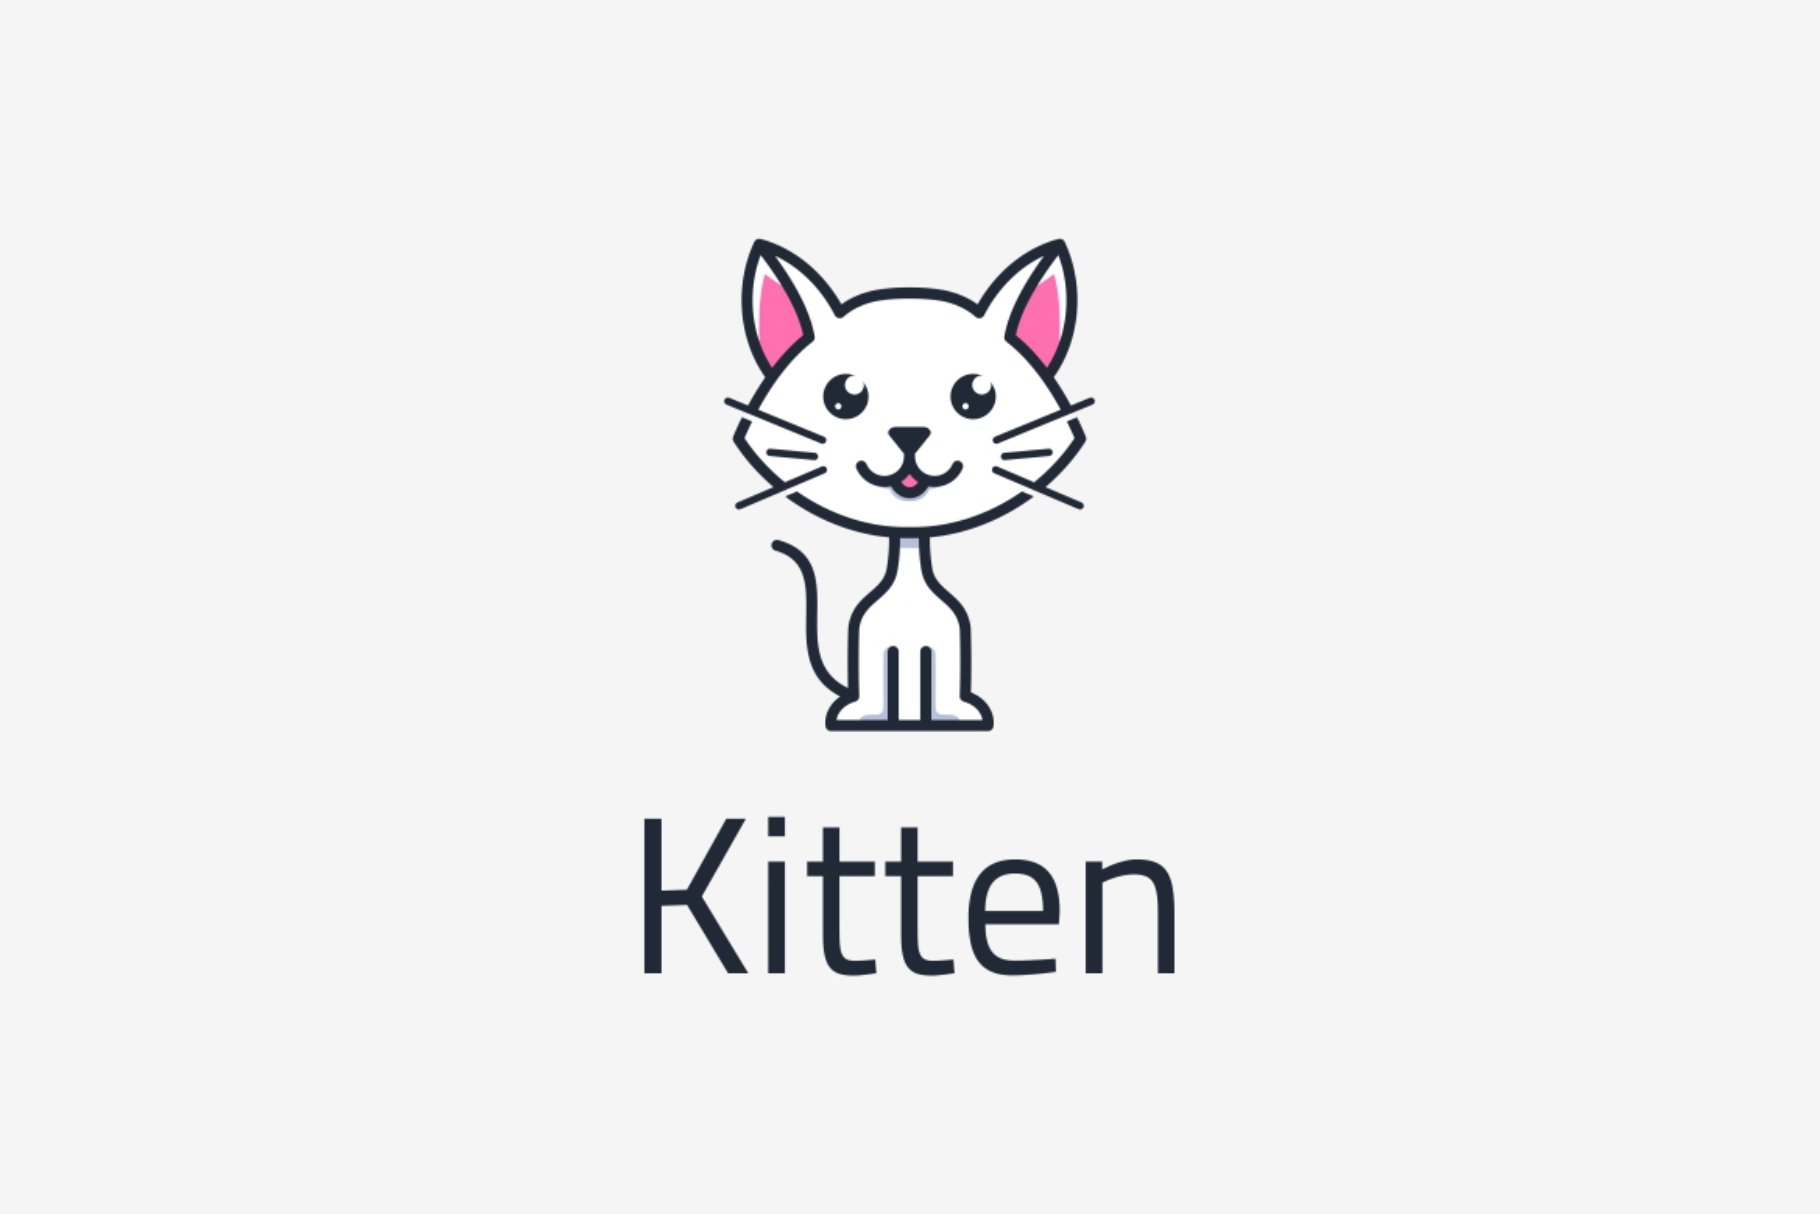 Cute Cat Kitten Mascot Logo cover image.